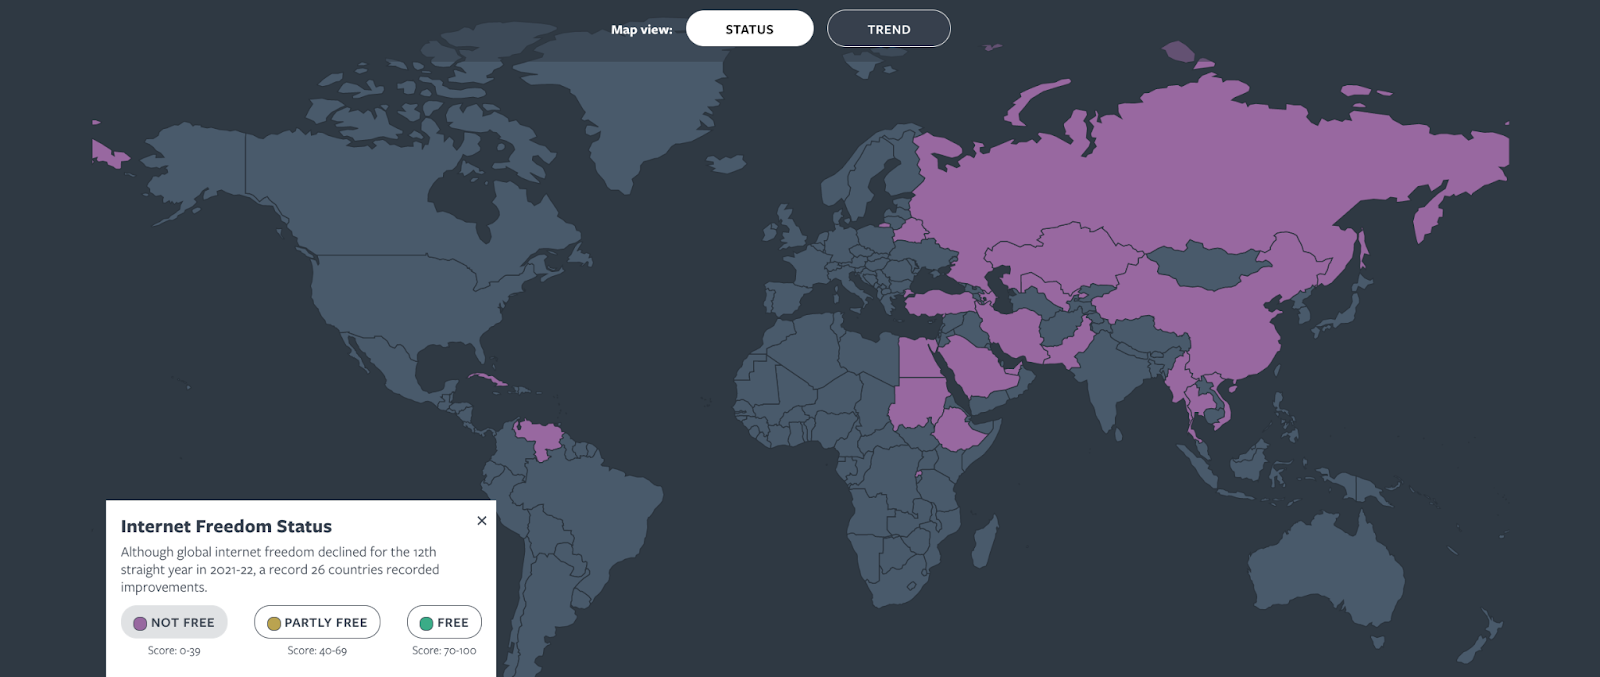 Internet freedom status worldwide.